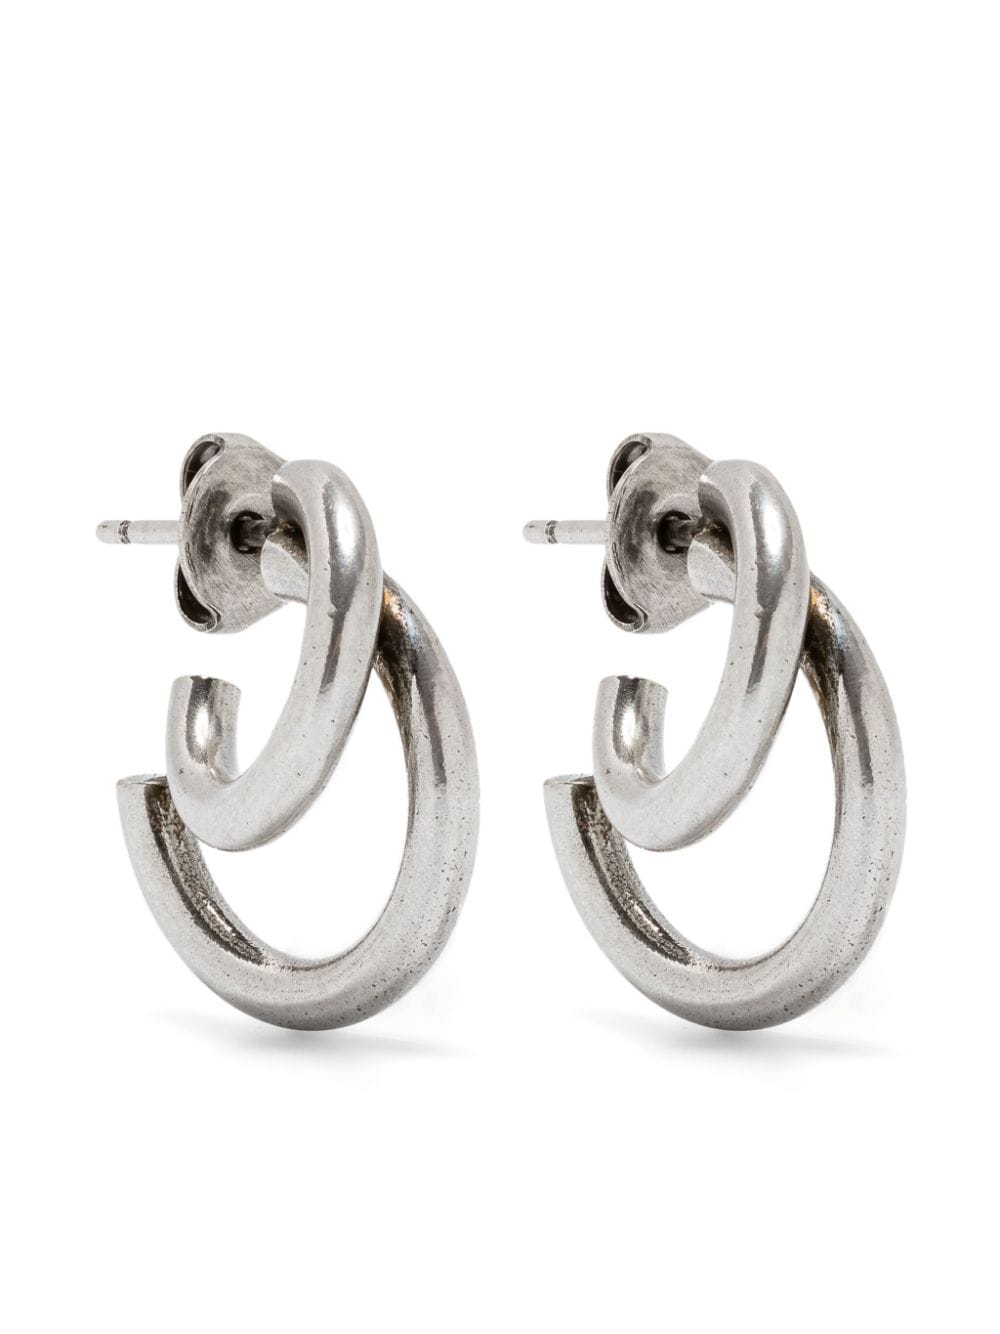 ISABEL MARANT double hoop earrings - Silver von ISABEL MARANT